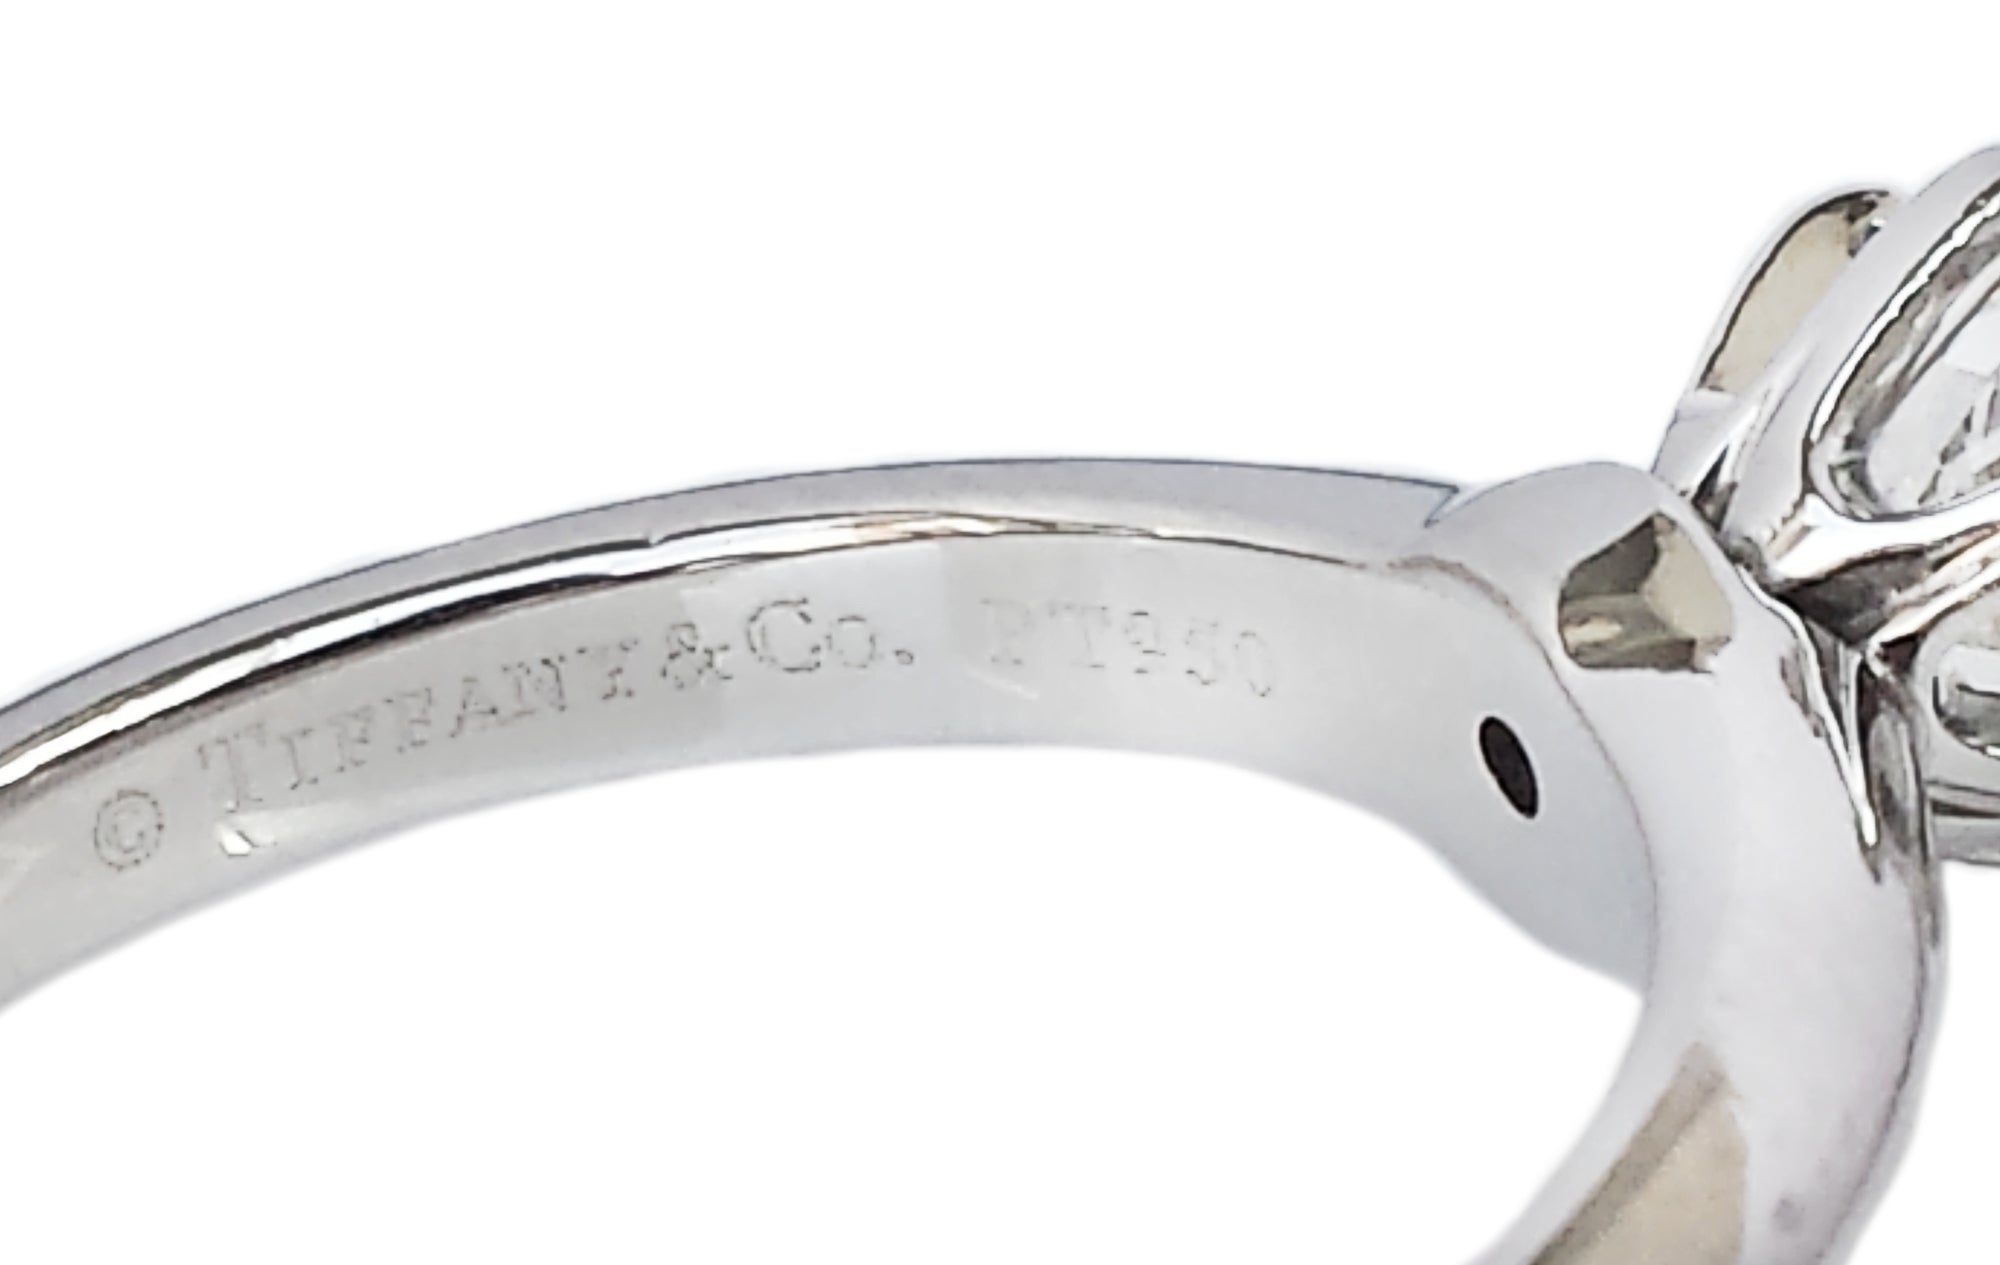 Tiffany & Co. 0.64ct I/SI1 Triple XXX Round Brilliant Diamond Engagement Ring